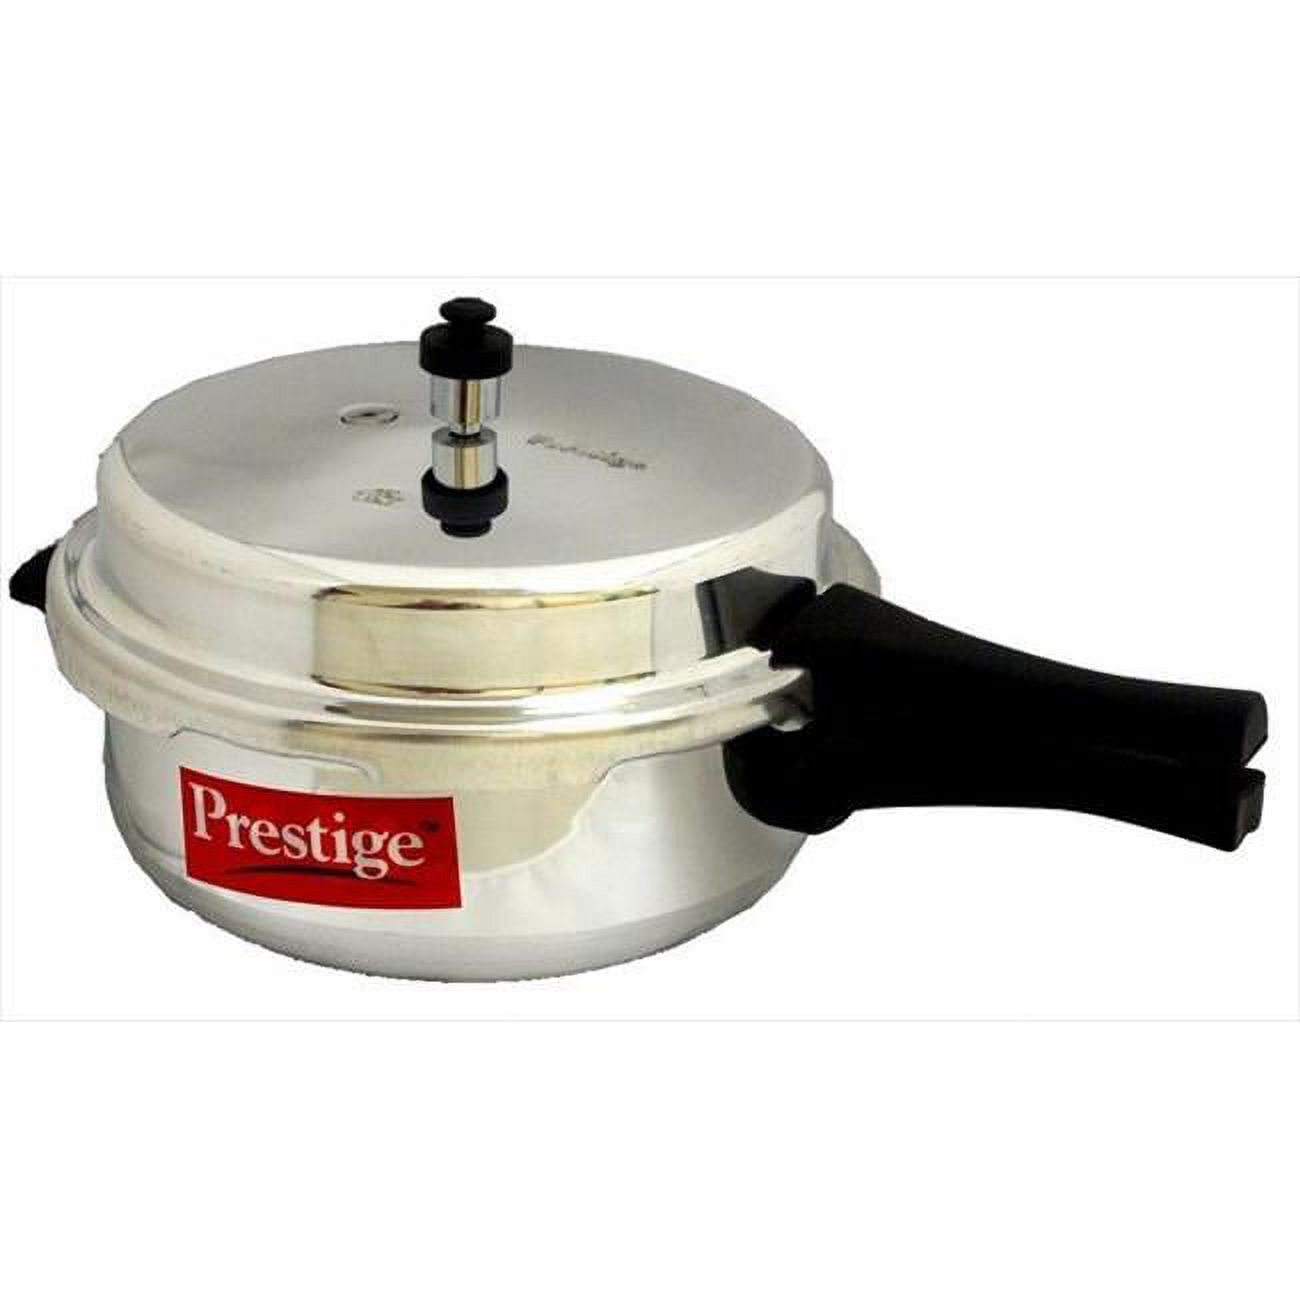 Prestige Popular Aluminum Senior Deep Pressure Pan